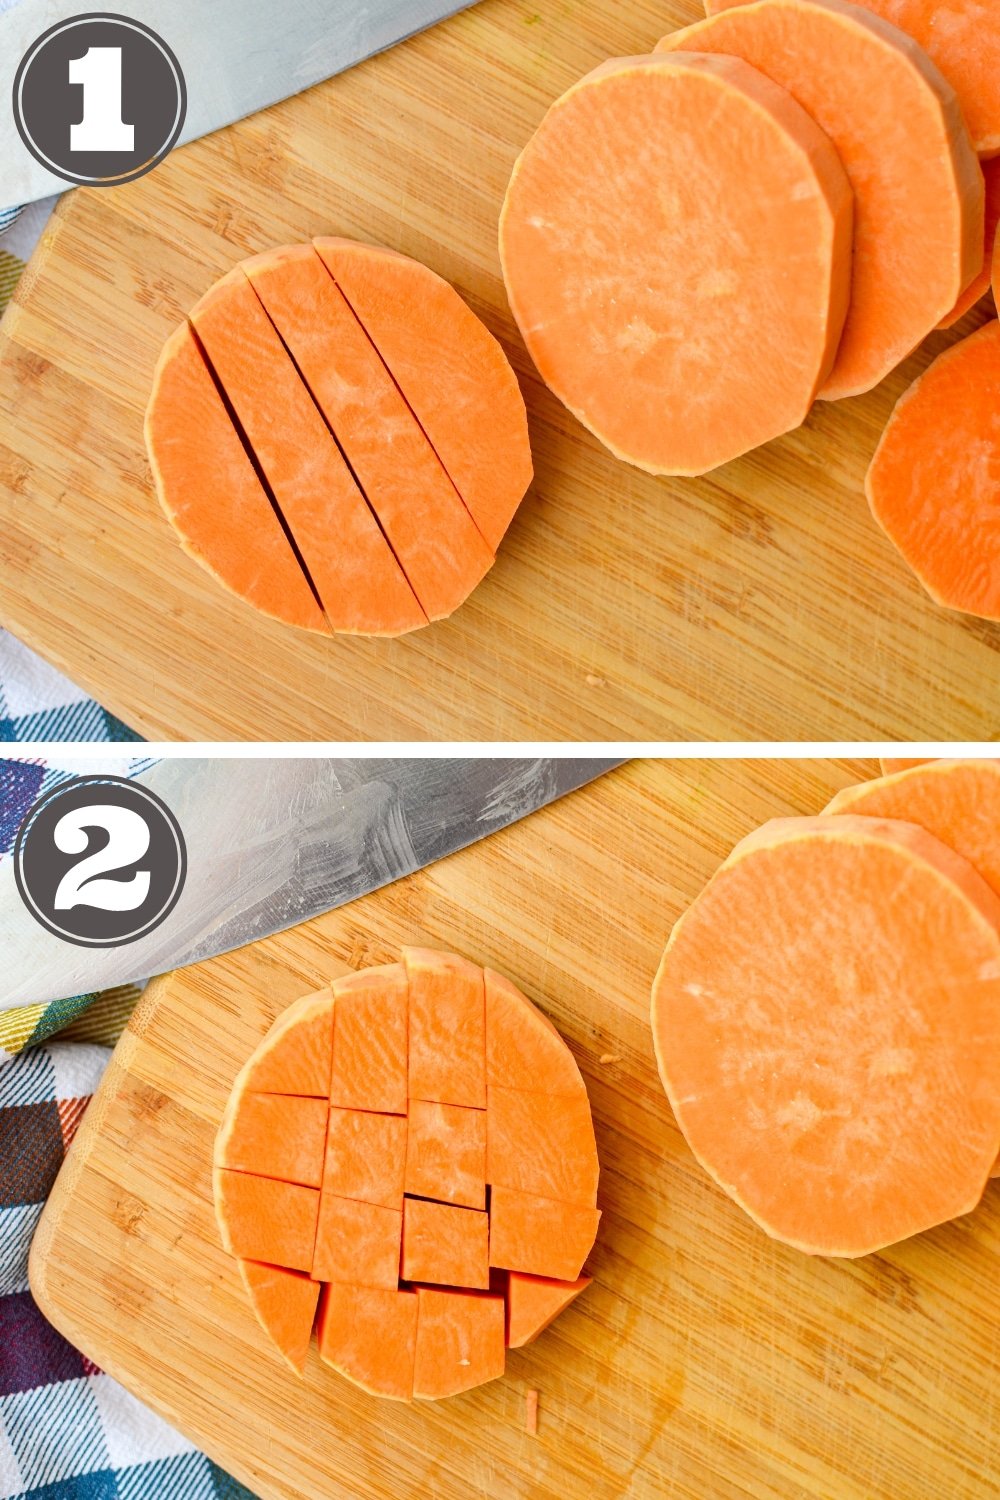 Cutting sweet potato into cubes.